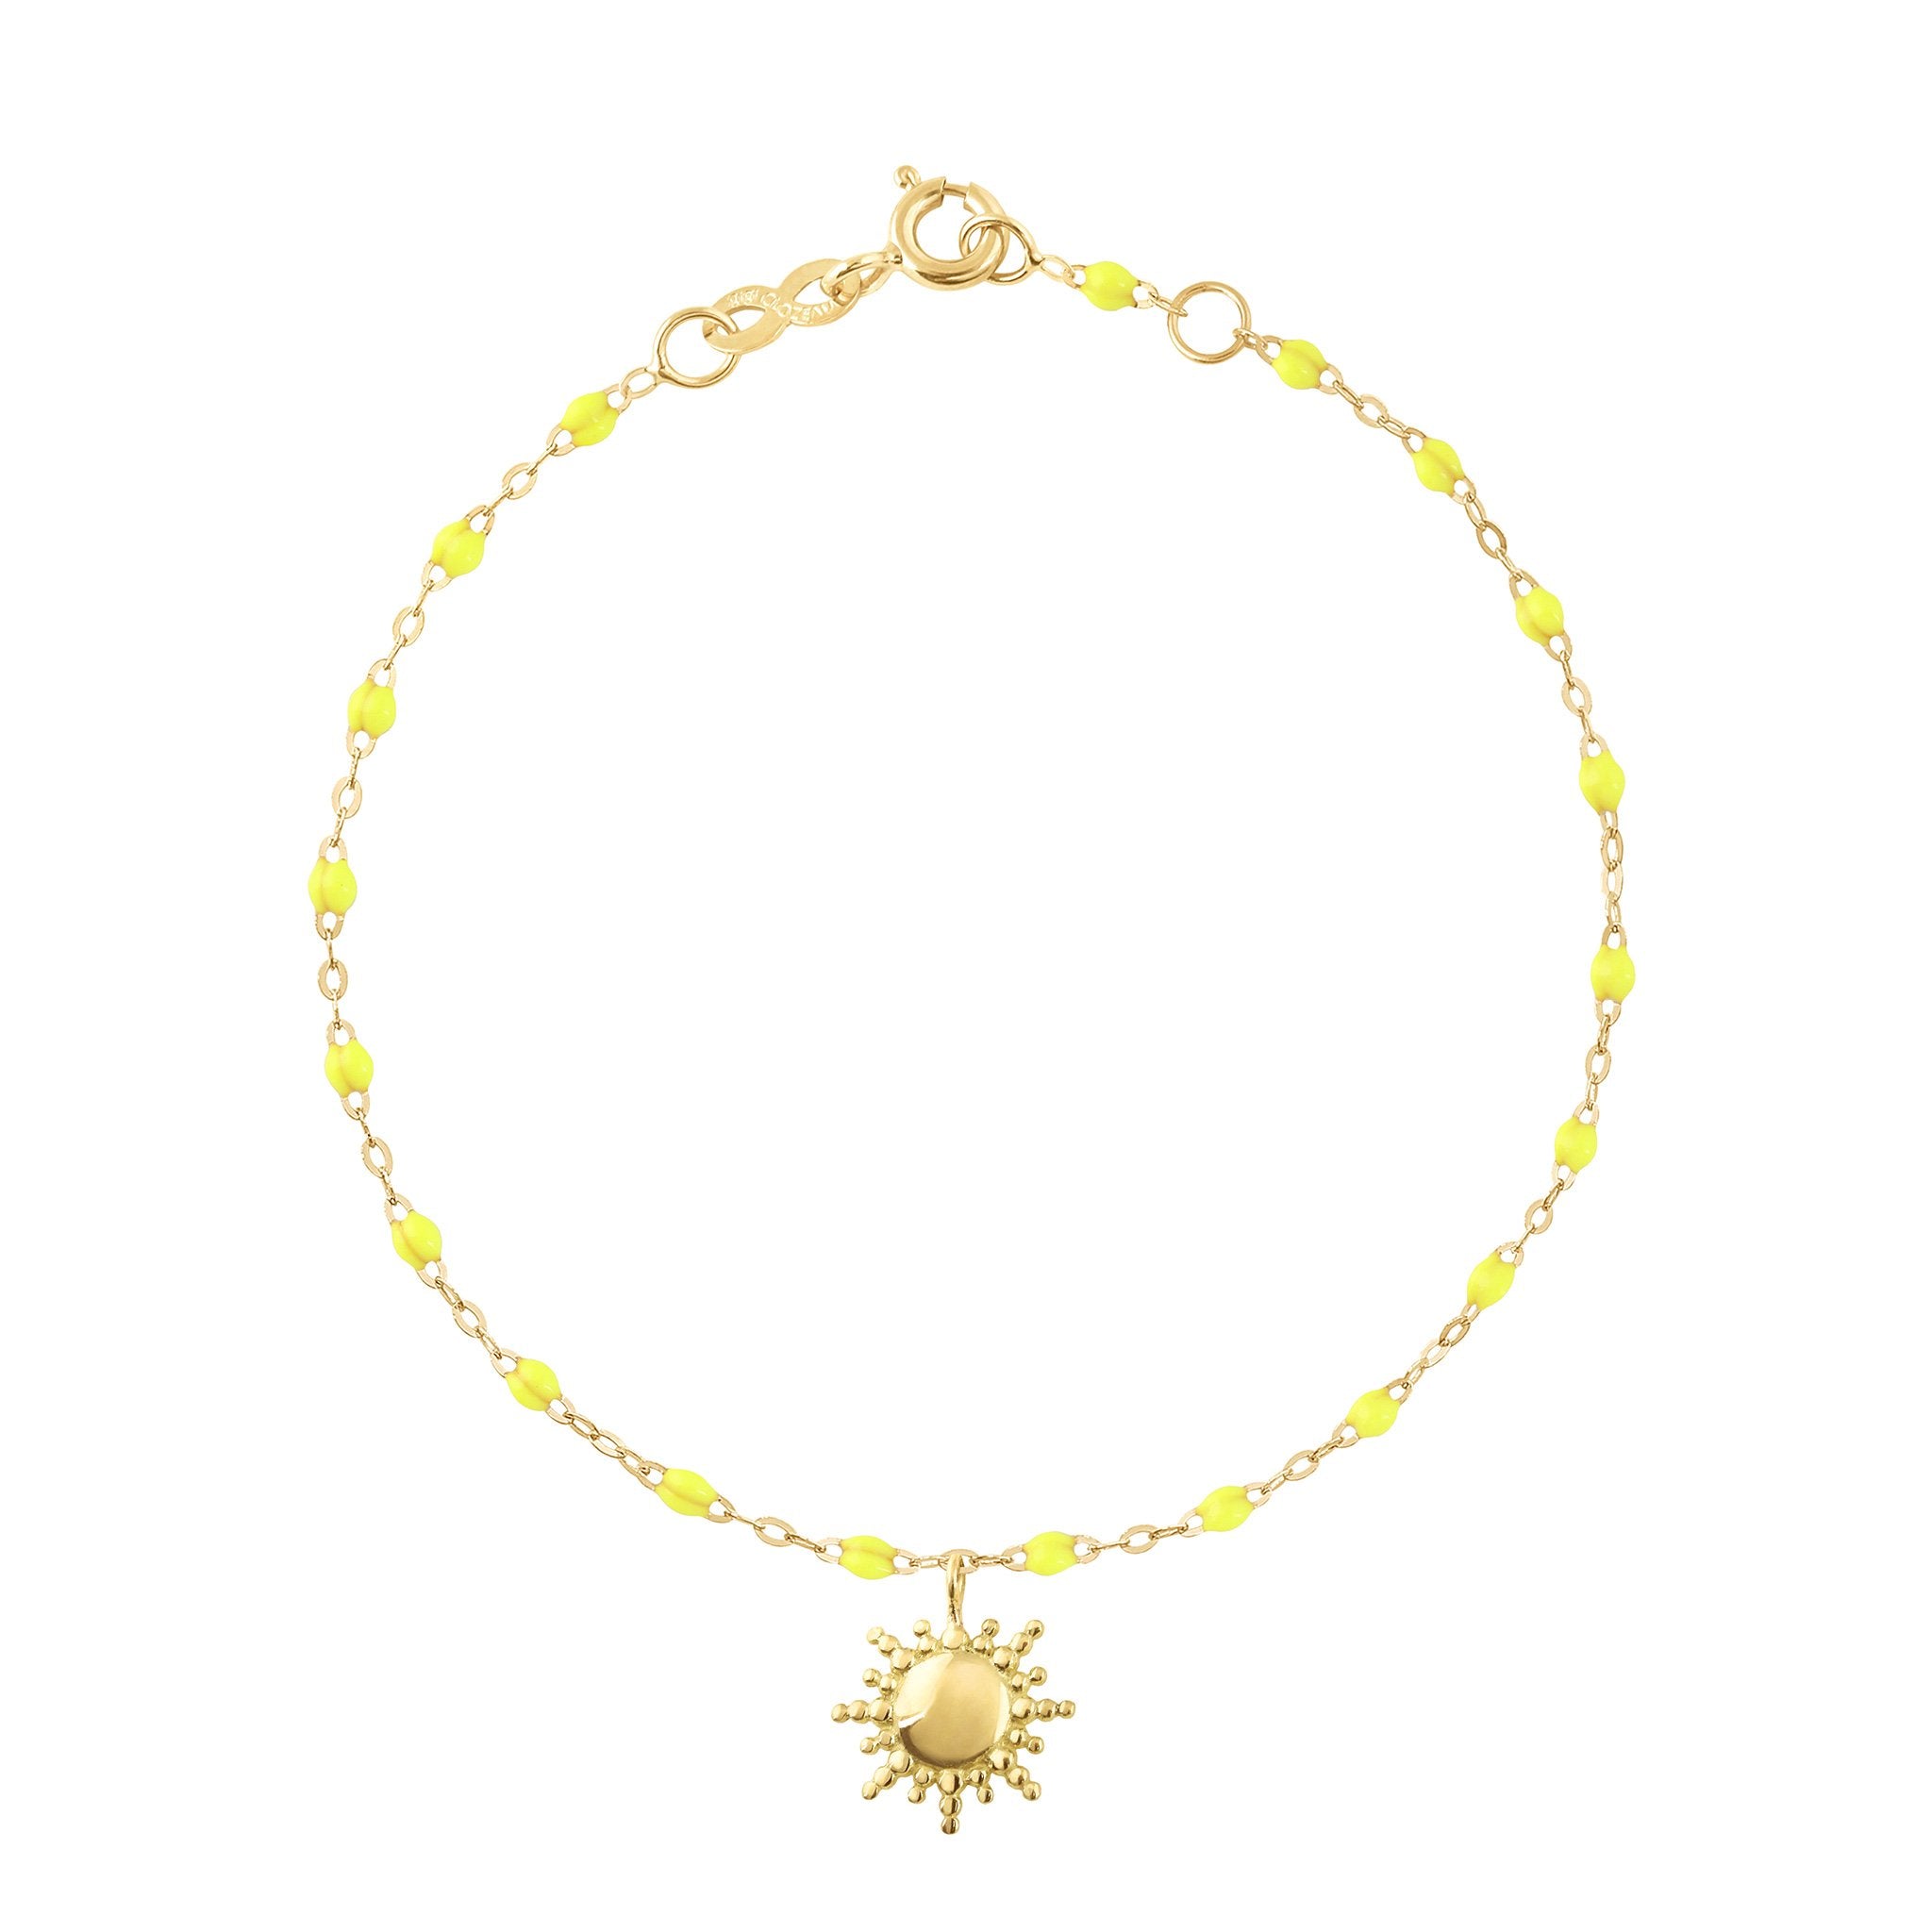 Bracelet jaune fluo Soleil, or jaune, 17 cm pirate Référence :  b3so001j1817xx -1